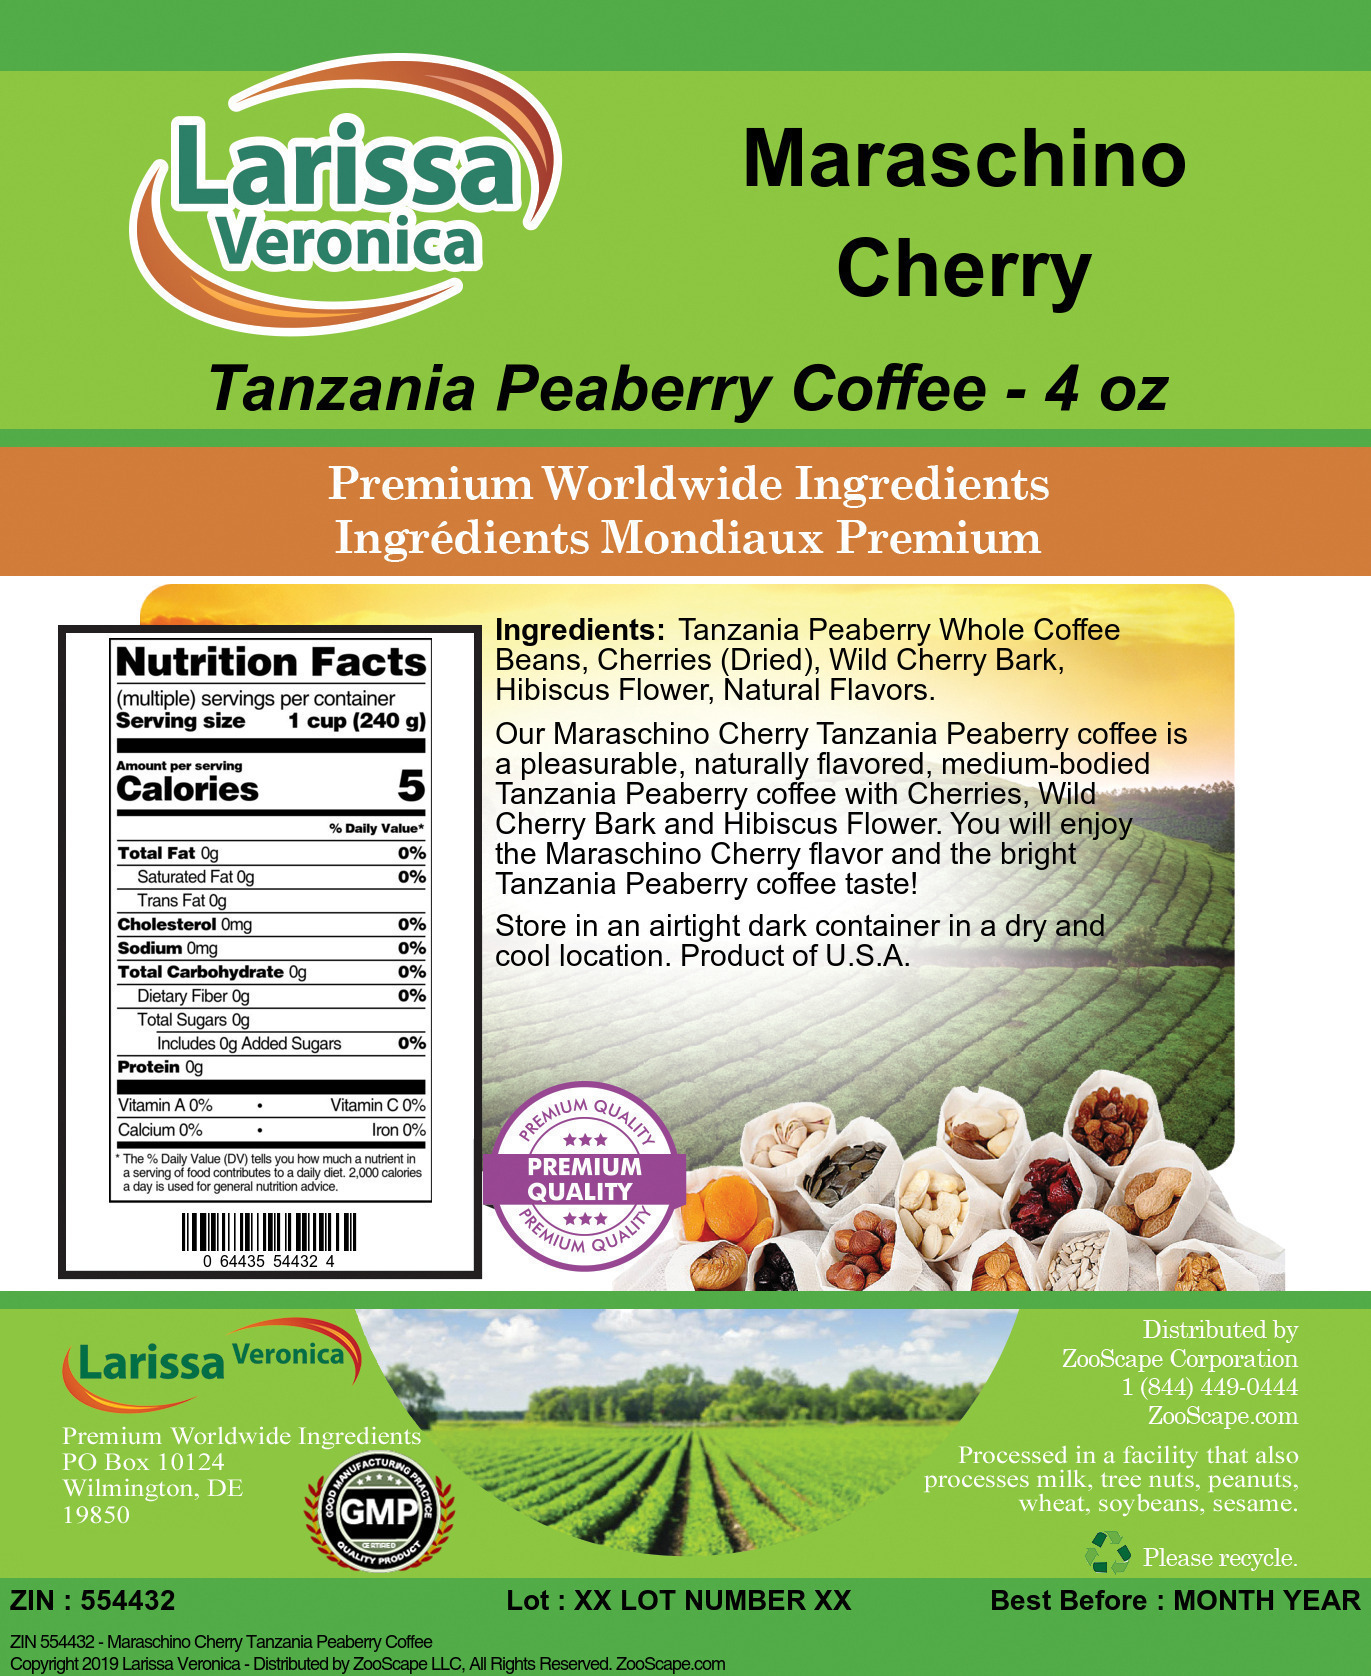 Maraschino Cherry Tanzania Peaberry Coffee - Label